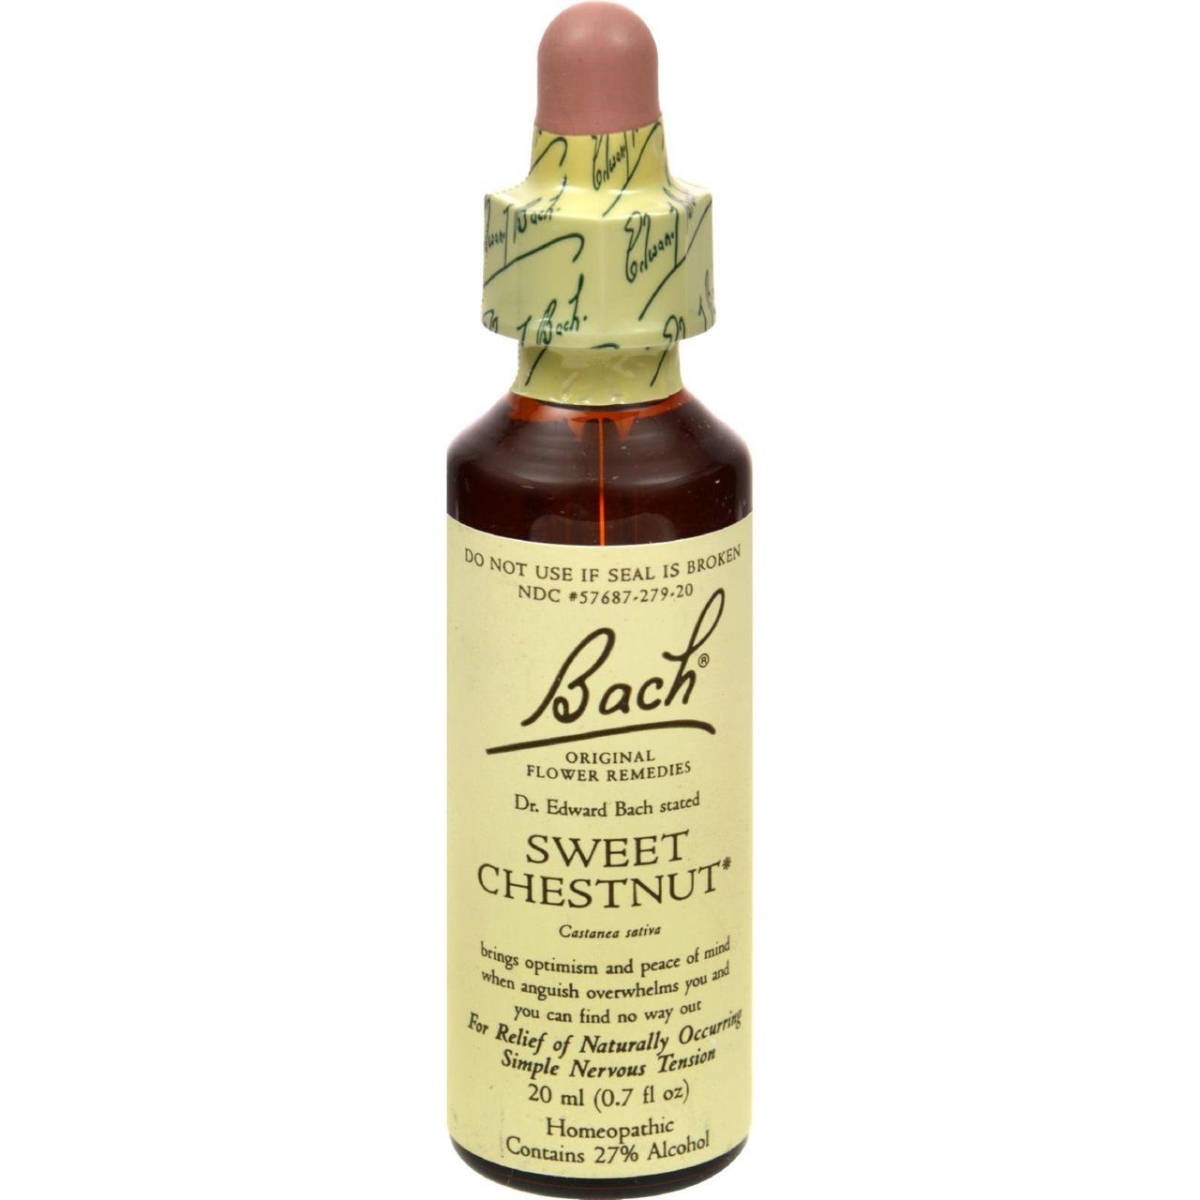 Hg0233965 0.7 Fl Oz Flower Remedies Essence, Sweet Chestnut